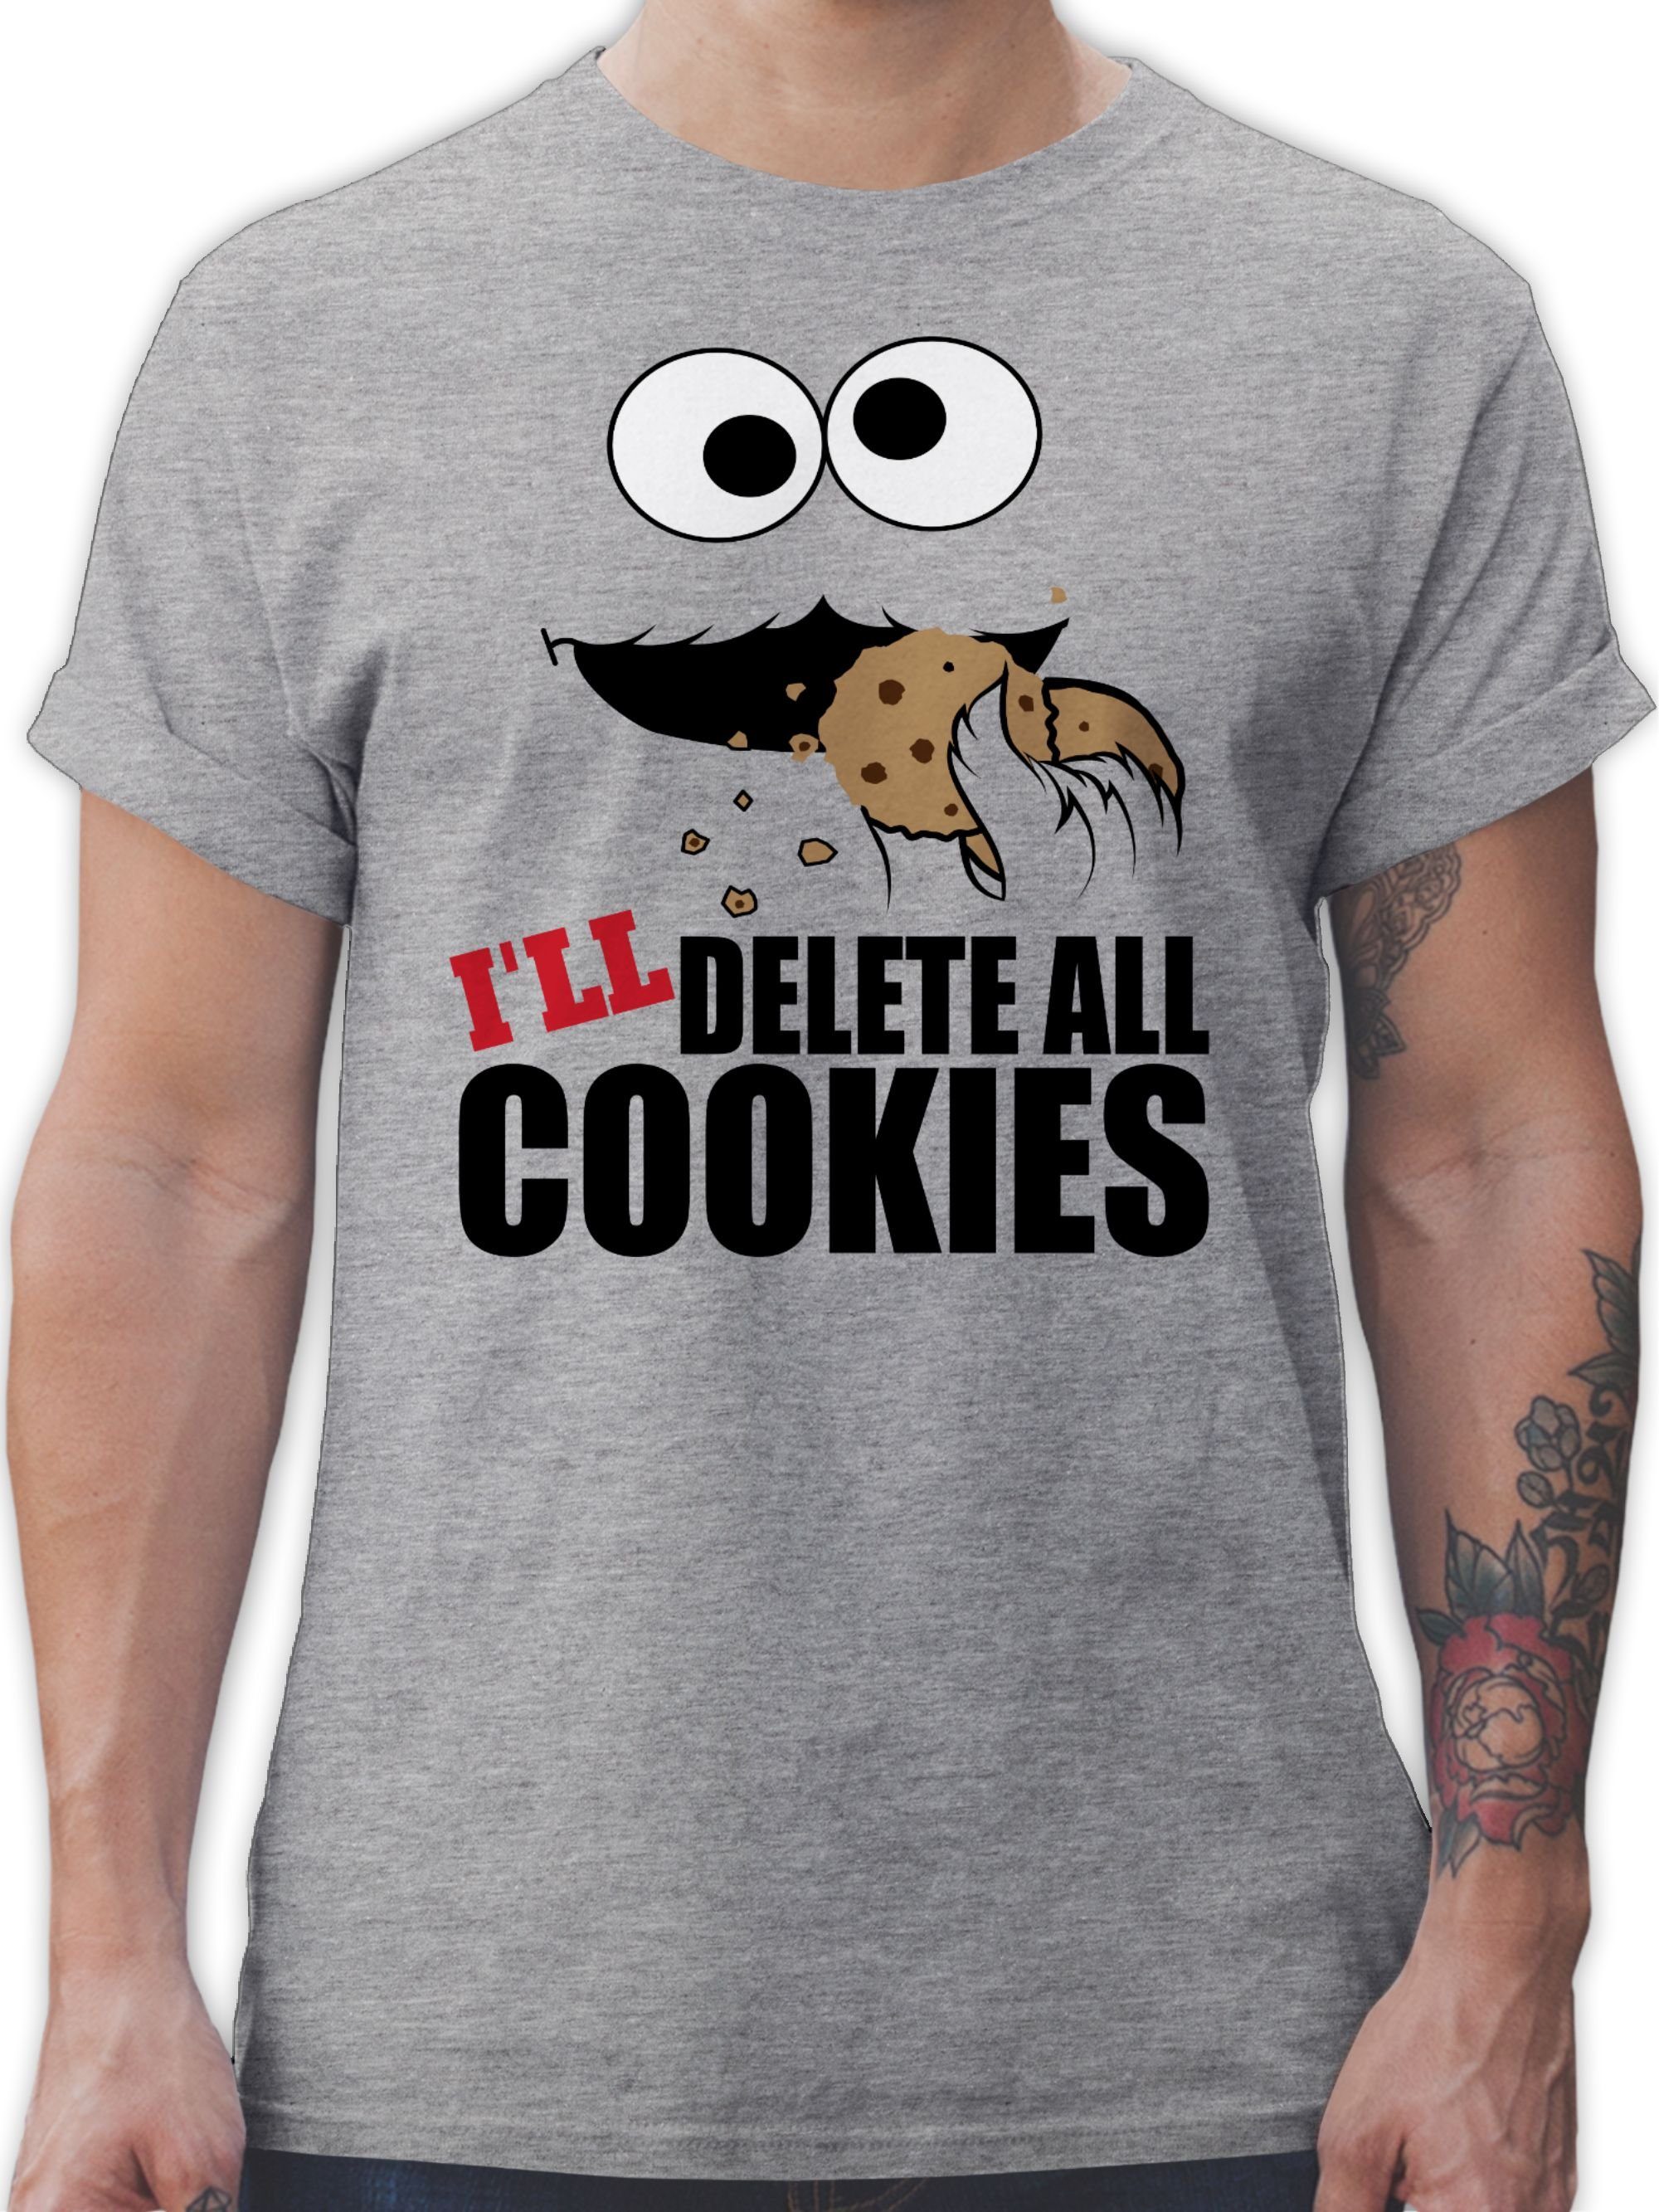 Shirtracer T-Shirt I will delete all cookies Keks-Monster Nerd Geschenke 3 Grau meliert